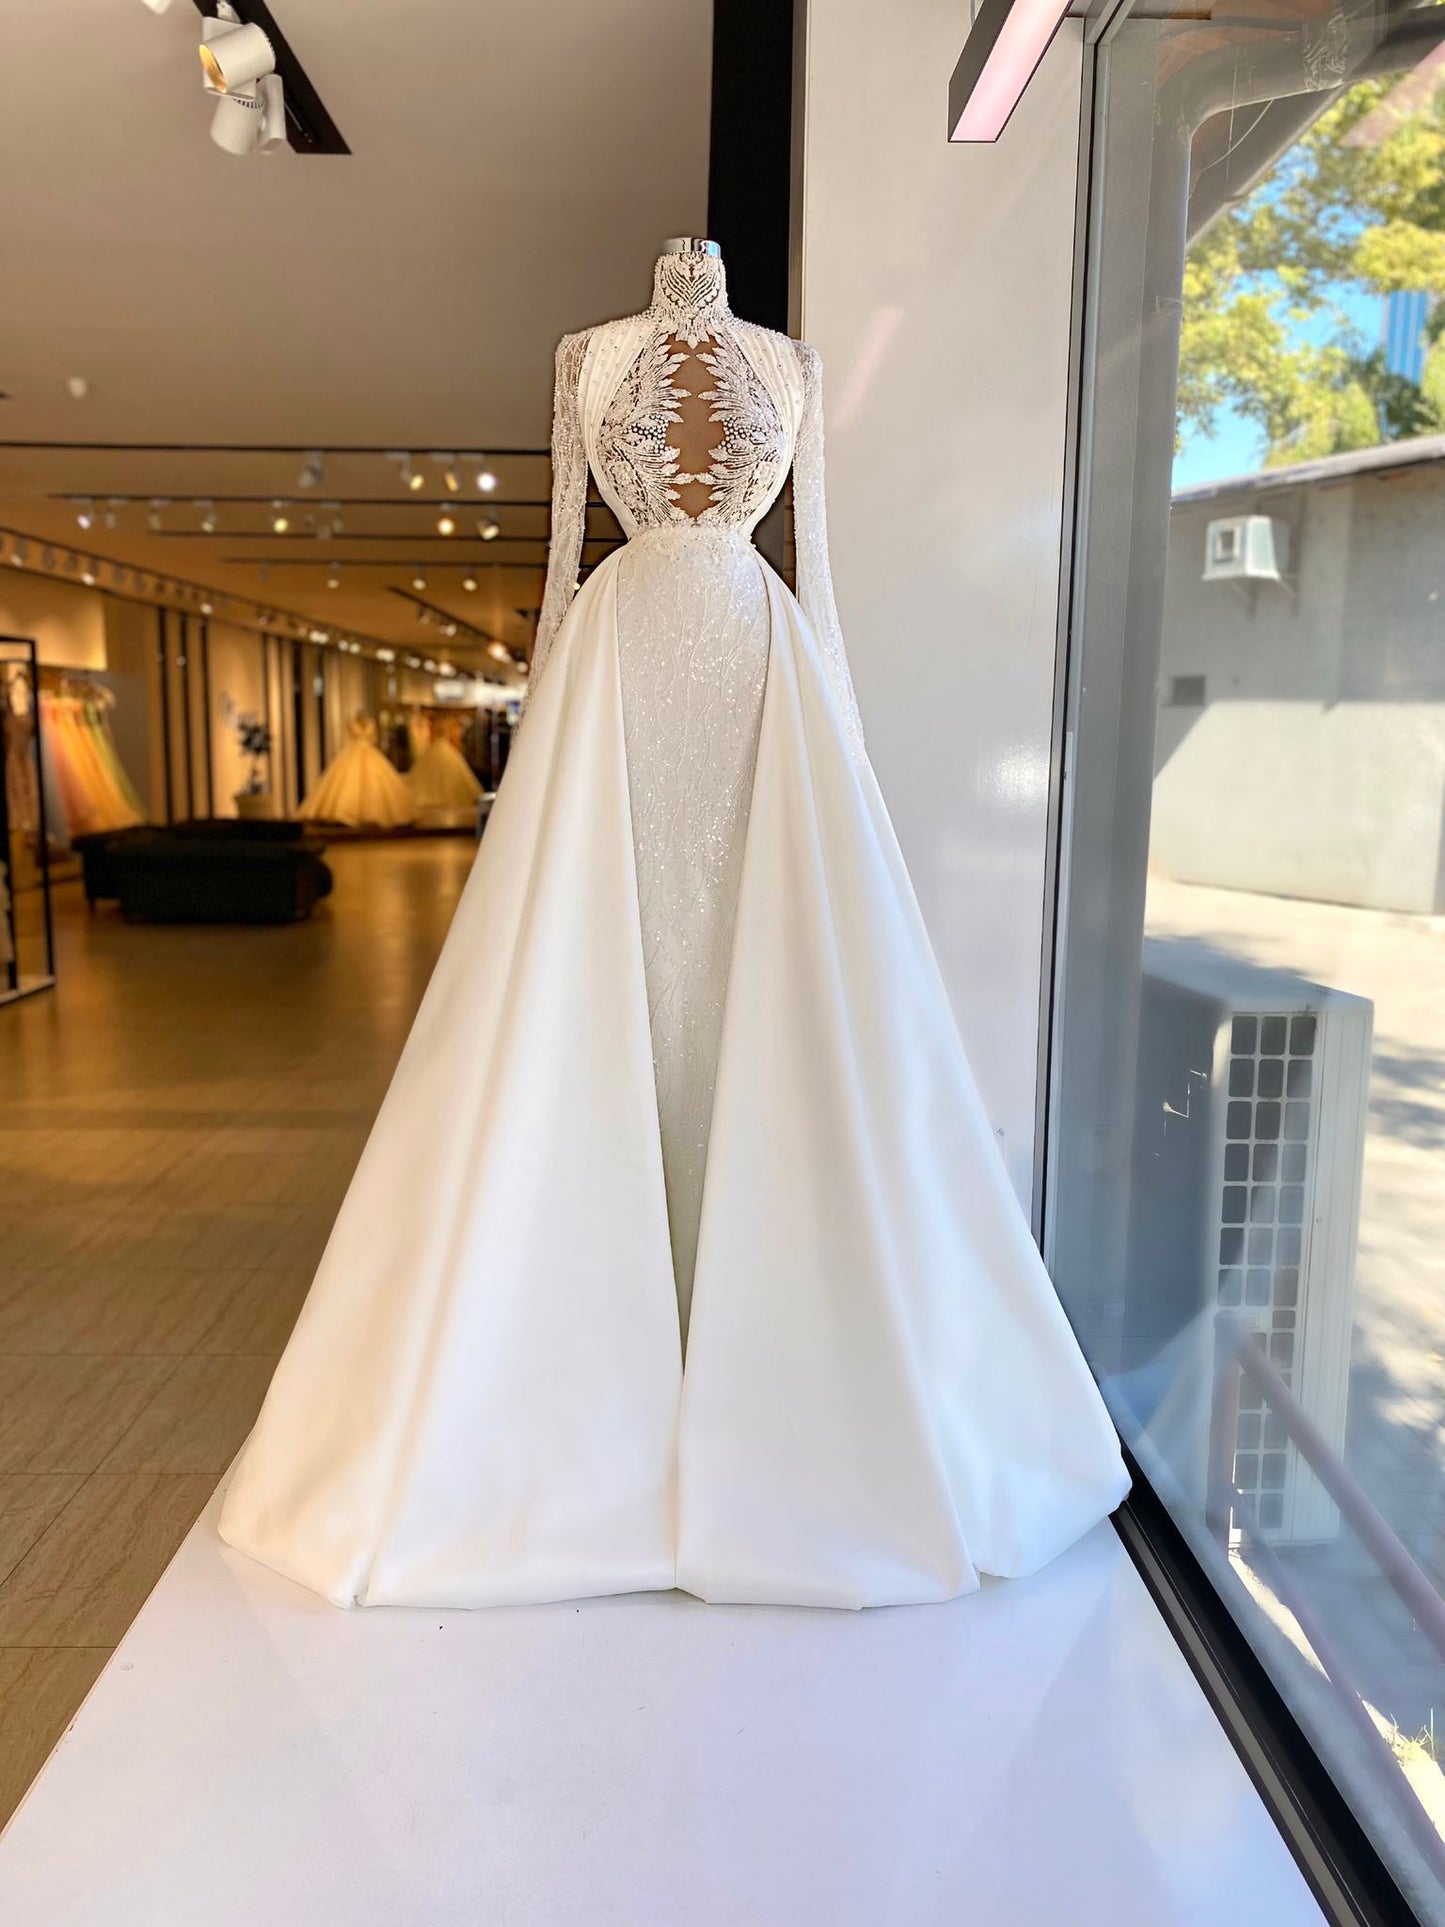 Grace Kelly Dress - Minna Fashion